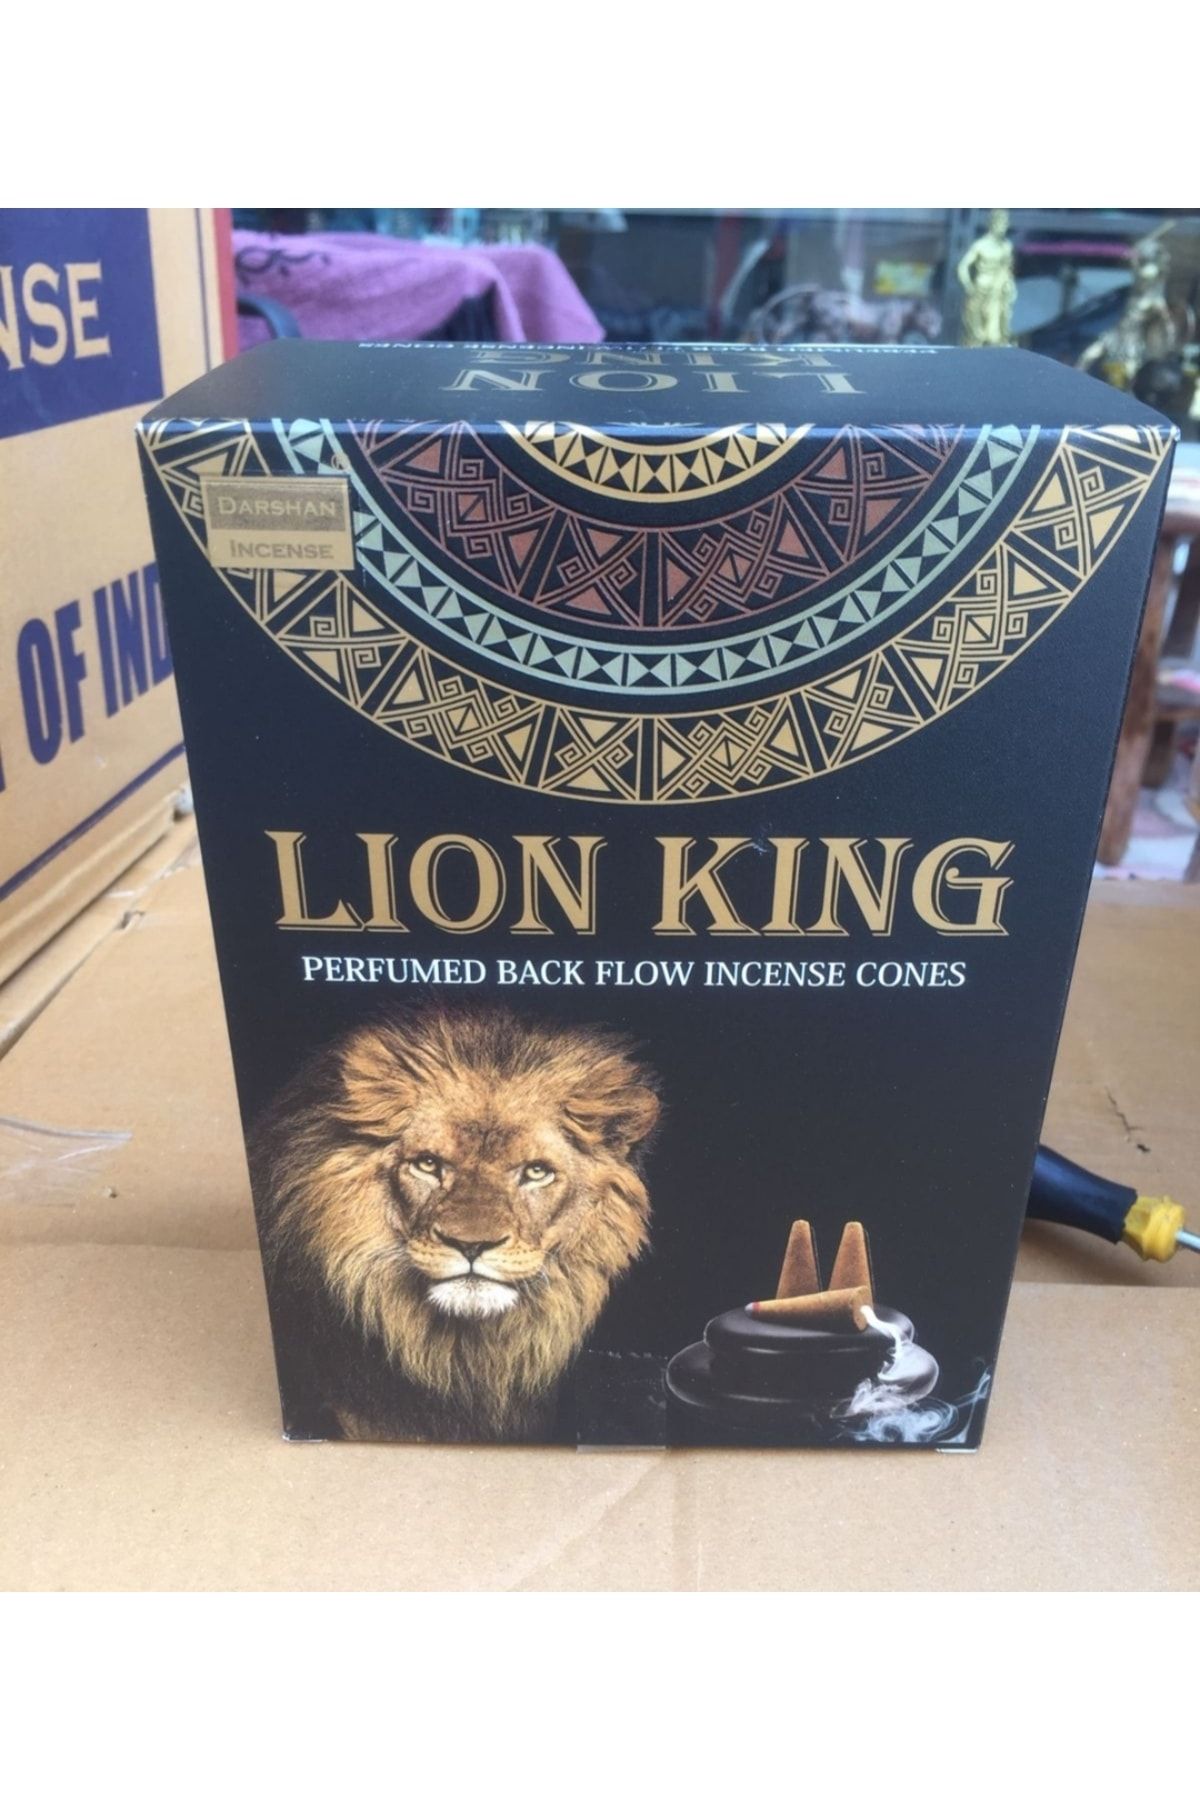 Okçu Lion King / Lion King Geri Akış Tütsü Şelale Konik Backflow Incense Cones 3 Adet /pieces